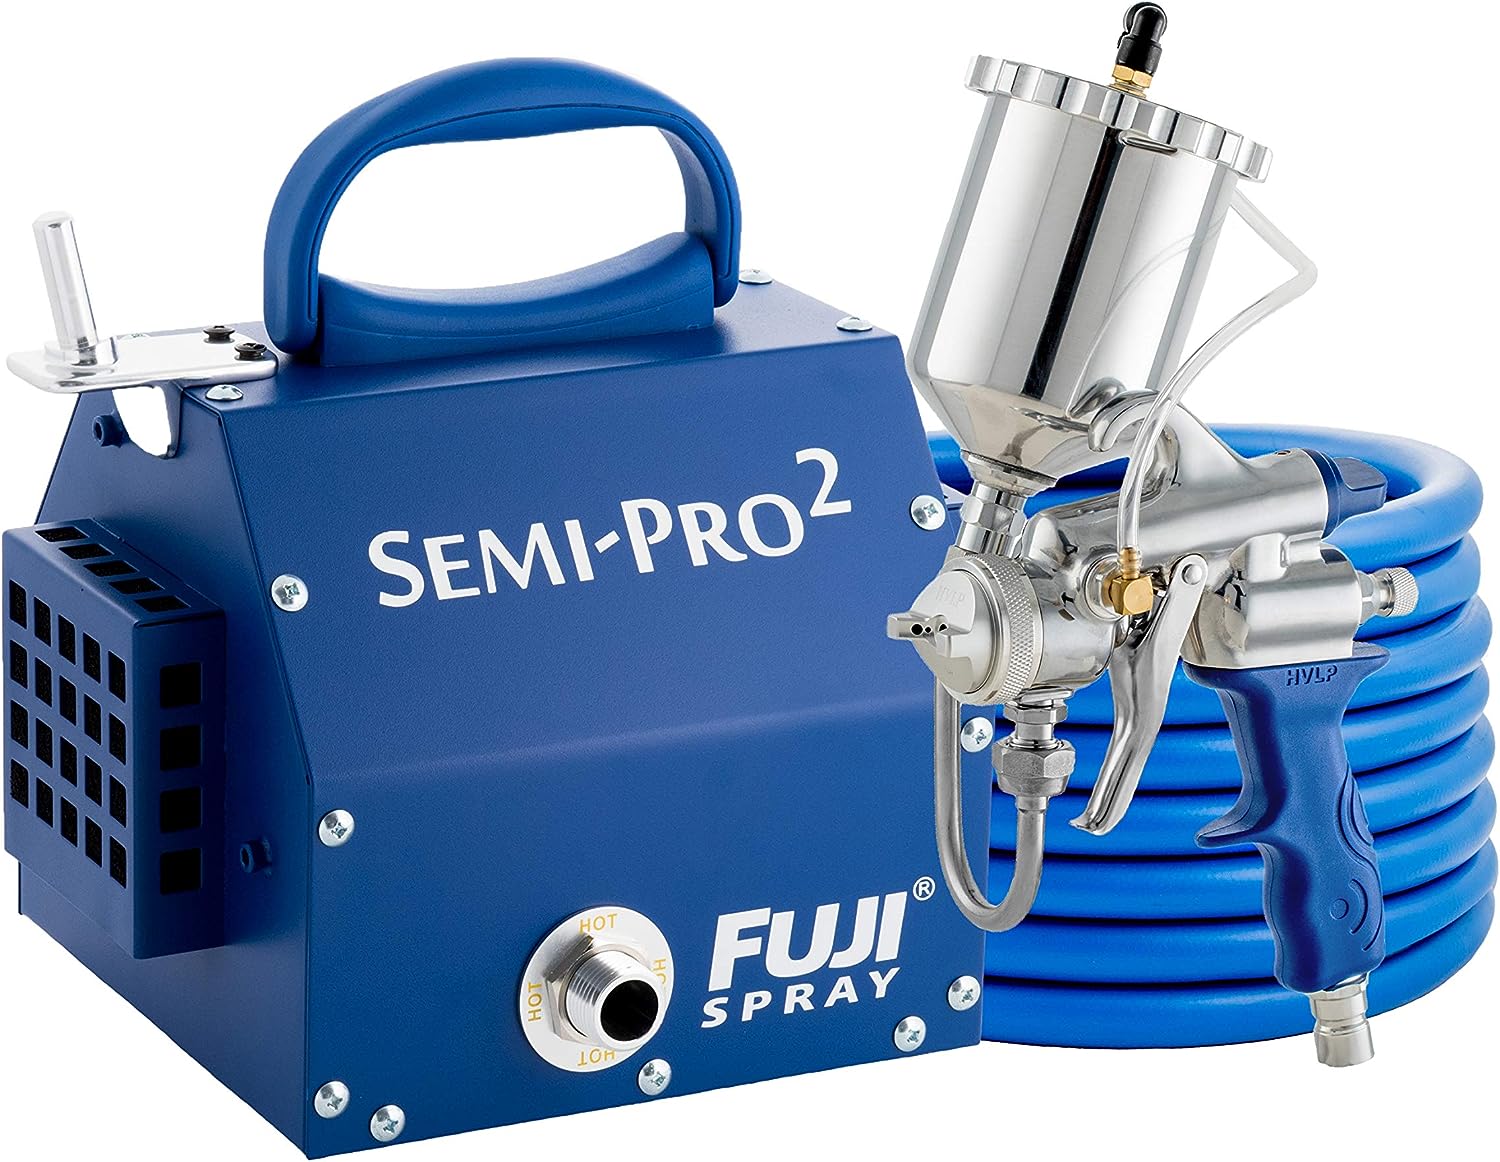 Fuji Spray 2203G Semi-PRO 2-Gravity HVLP Spray System, Blue